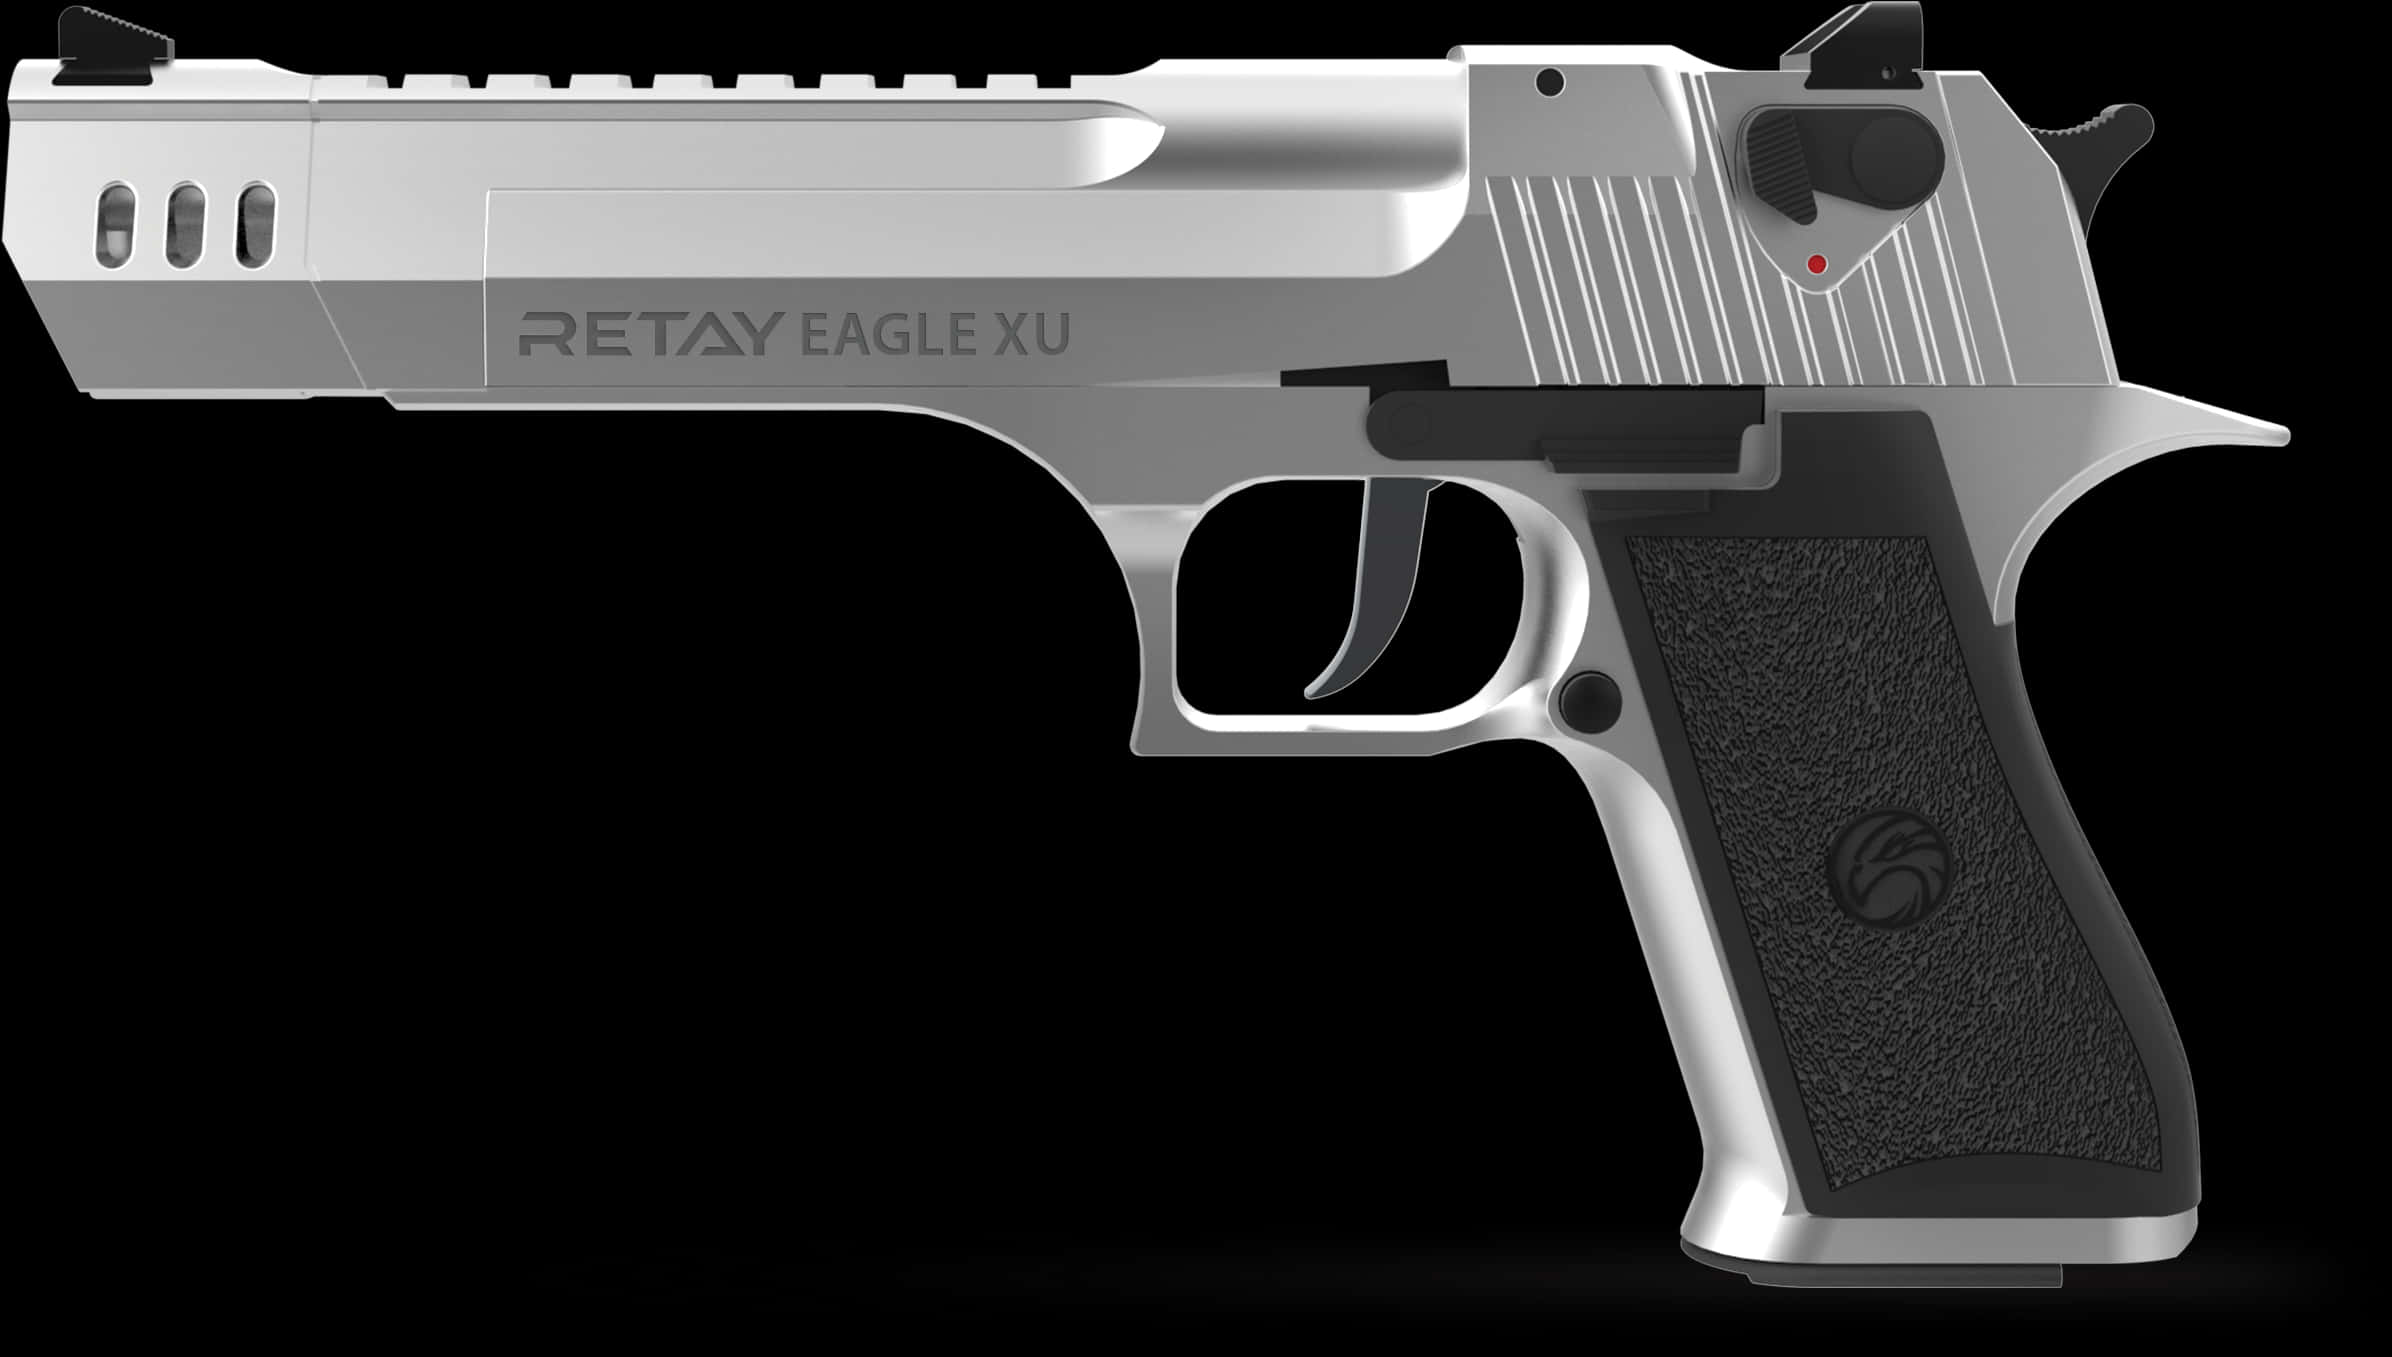 Silver Retay Eagle X U Pistol PNG